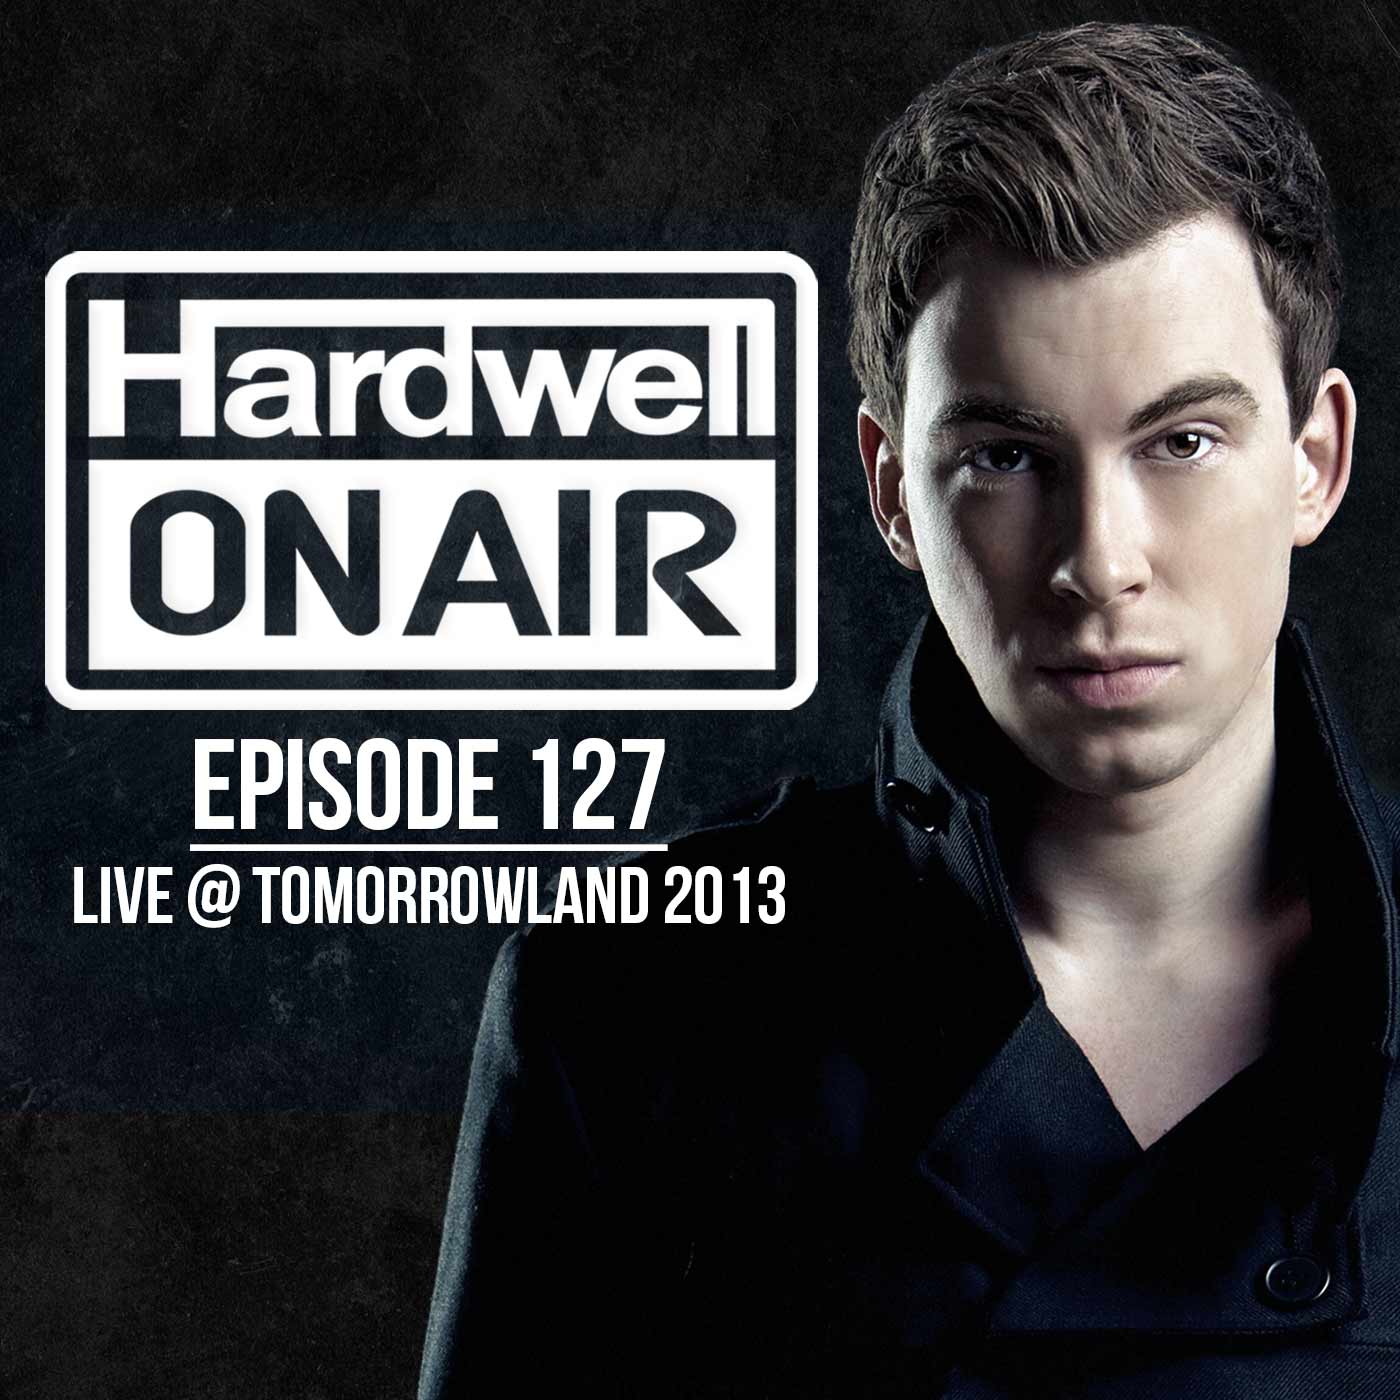 Hardwell Live @ Tomorrowland 2013 (Hardwell On Air 127)